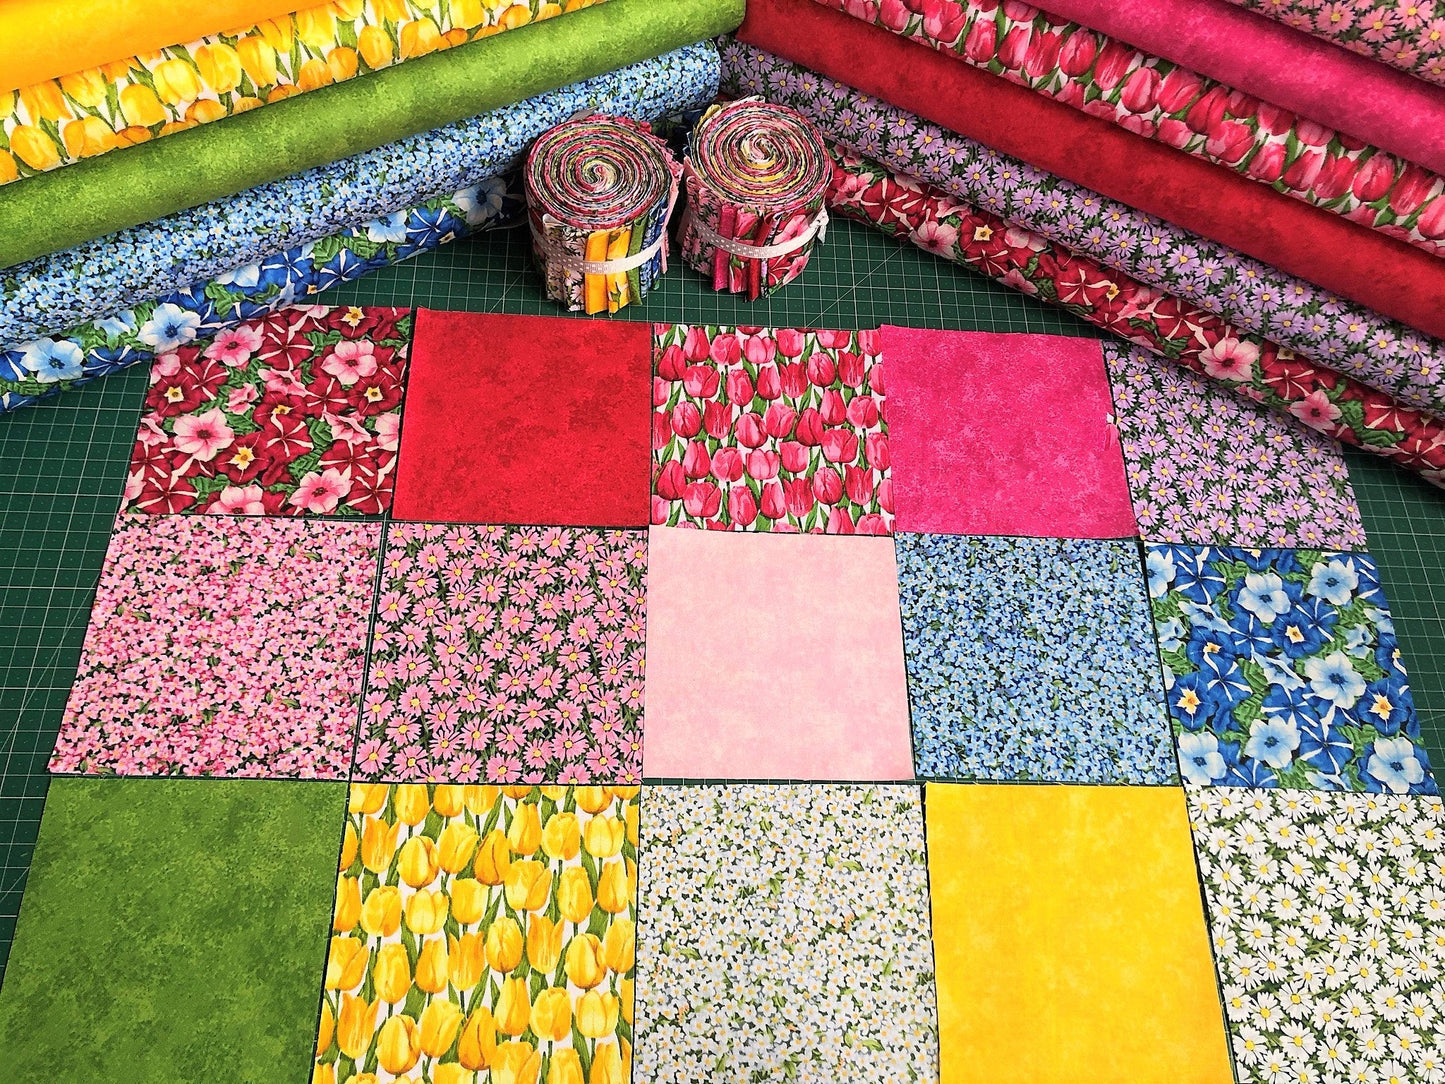 Jelly Roll Fabric Makower - Summer Garden and Spraytime